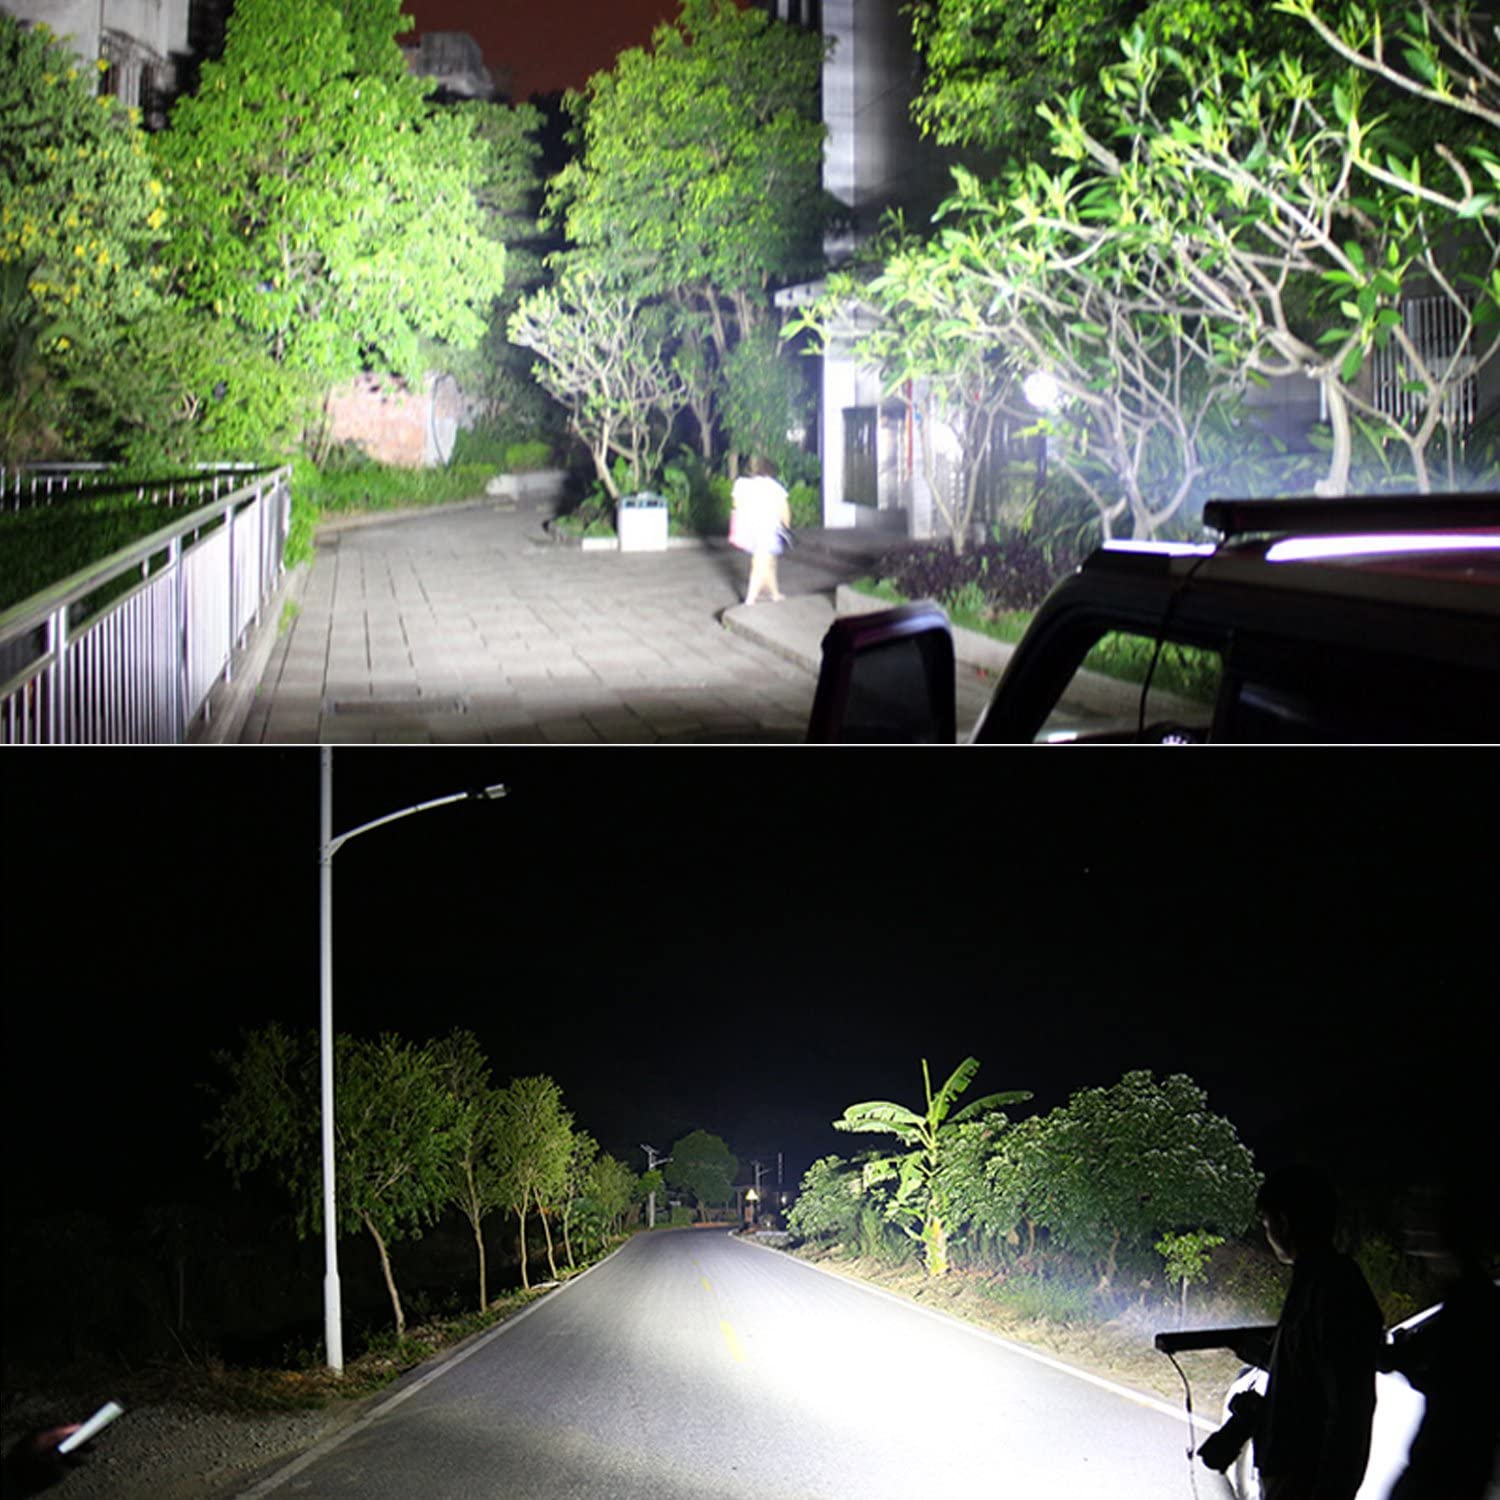 LED light Spot Flood Light 120W / 22inch off road work lightsfor 4WD. - e4cents